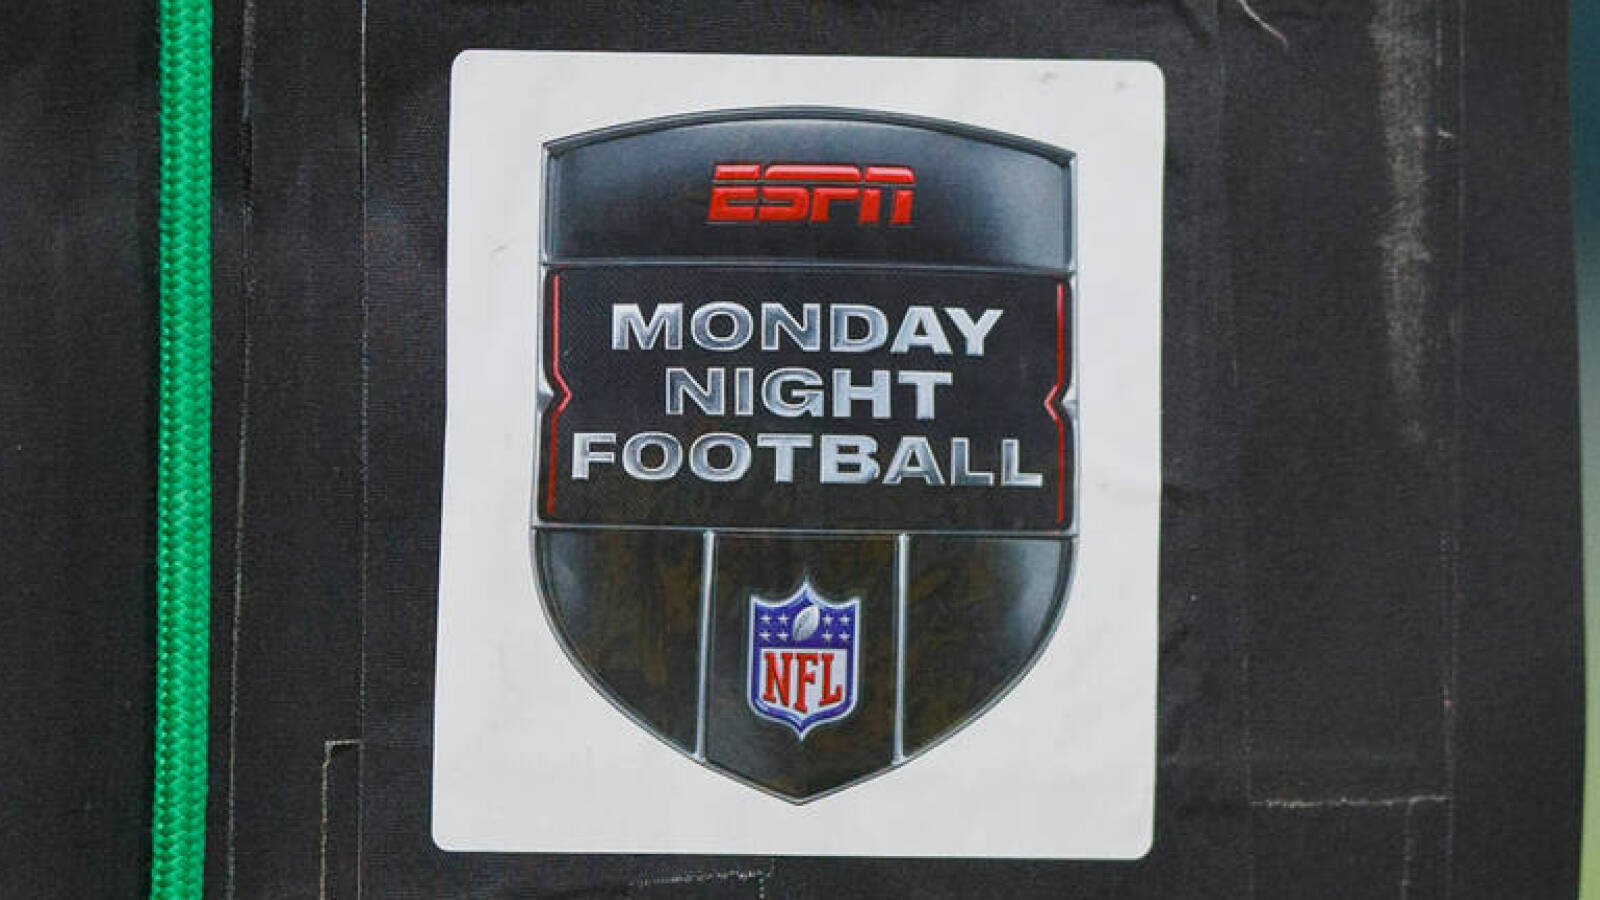 NFL Monday Night Football Schedule on ESPN